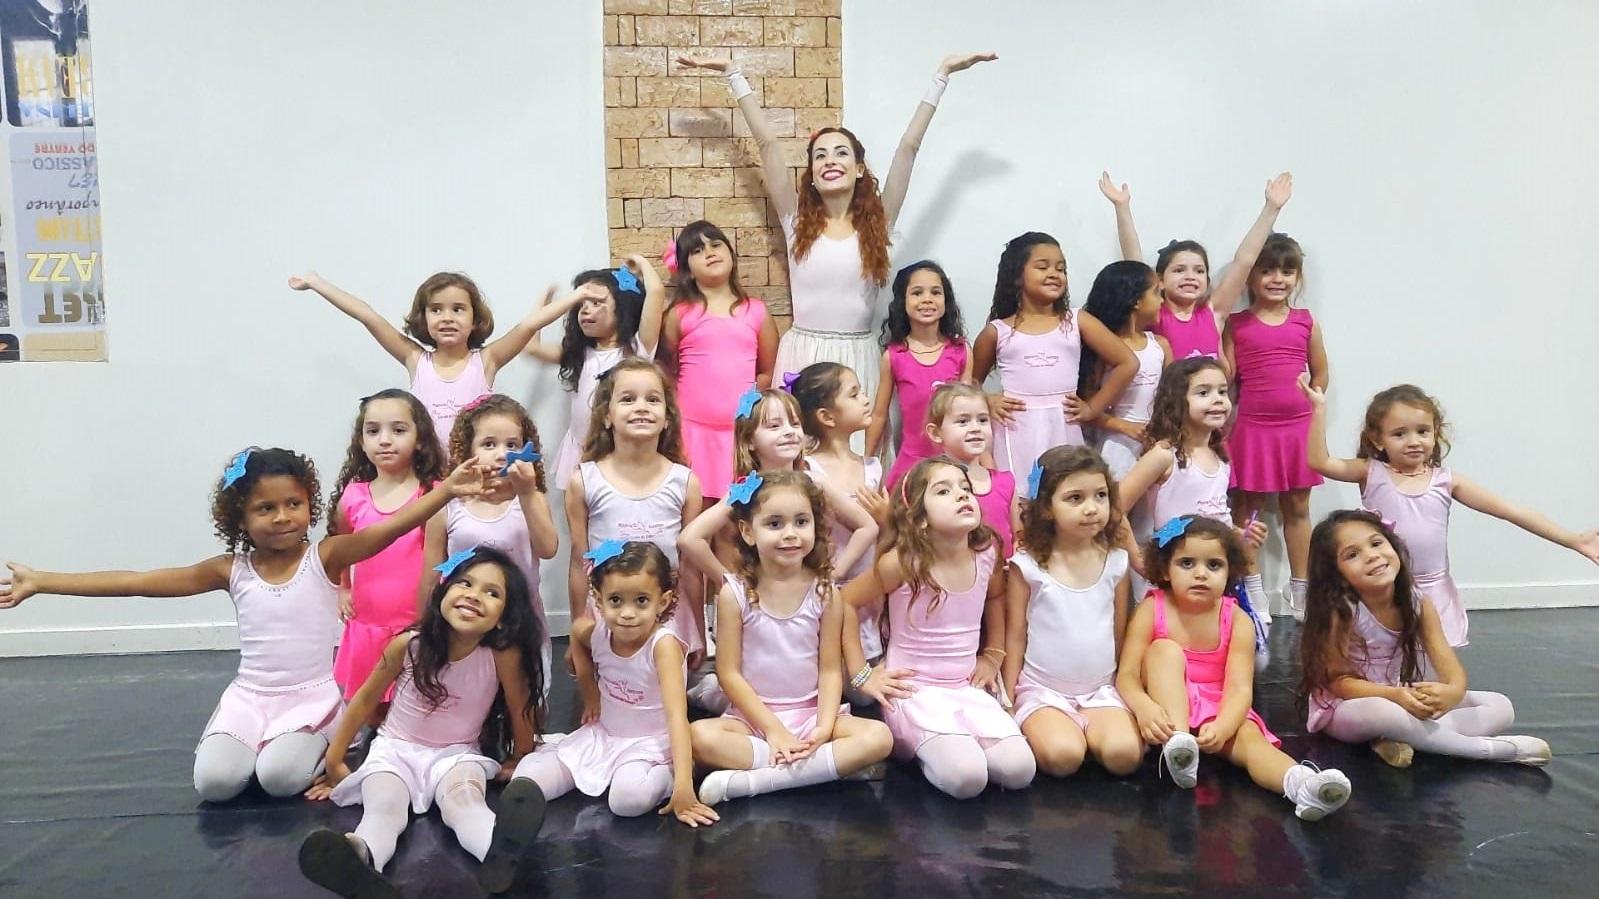 Escola de Dança Studio de Artes Manoela Jasques recebe bailarinas para workshop profissional